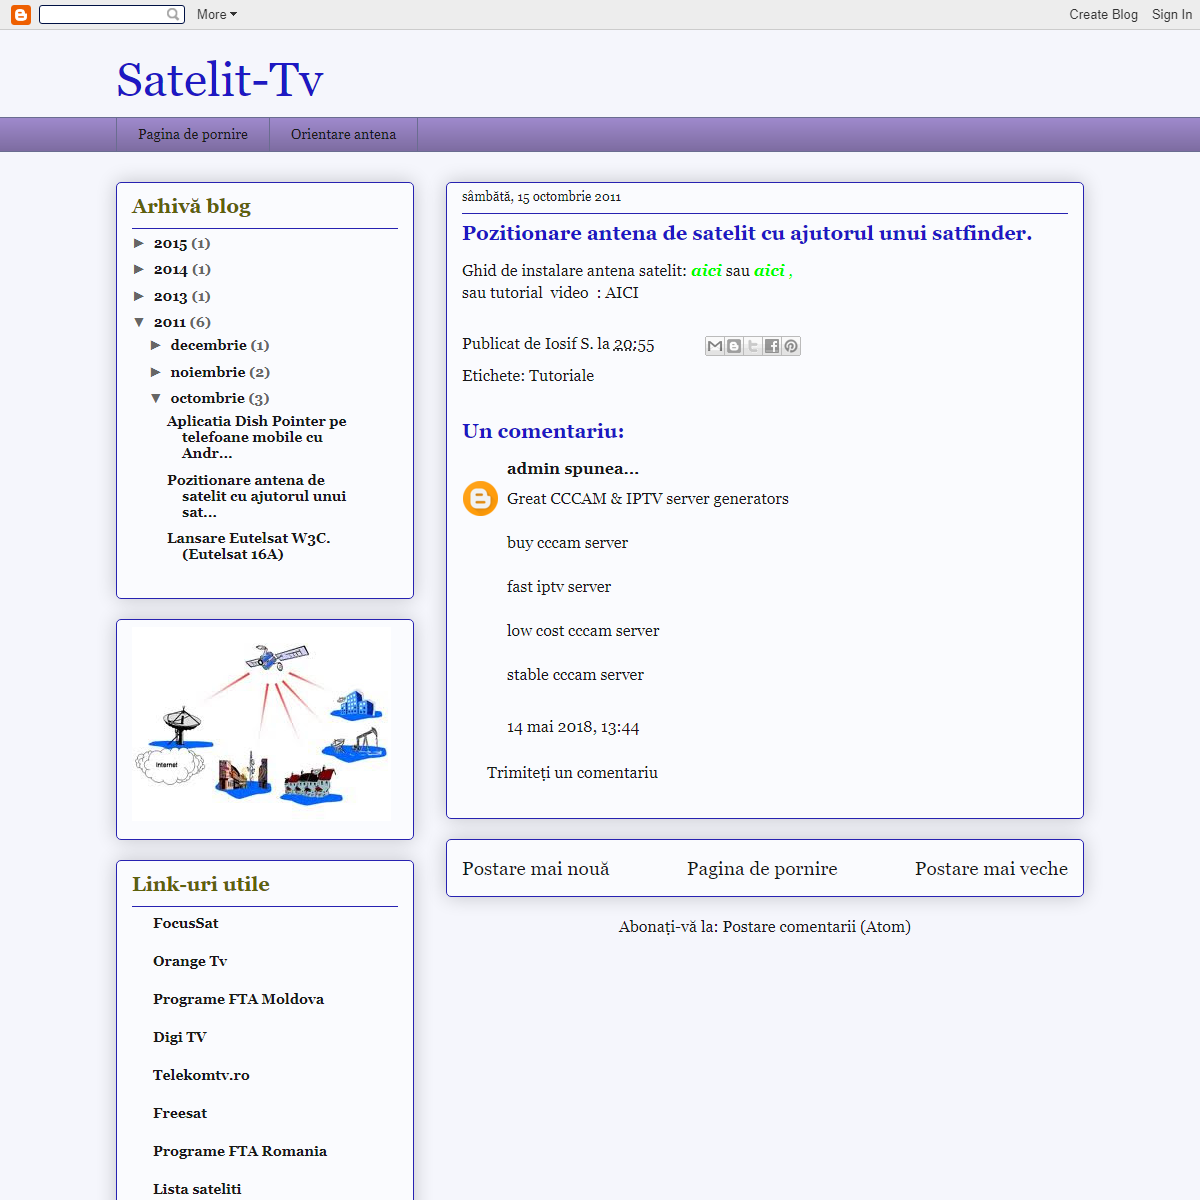 A complete backup of https://hobbysatelit.blogspot.com/2011/10/instalare-antena-de-satelit.html